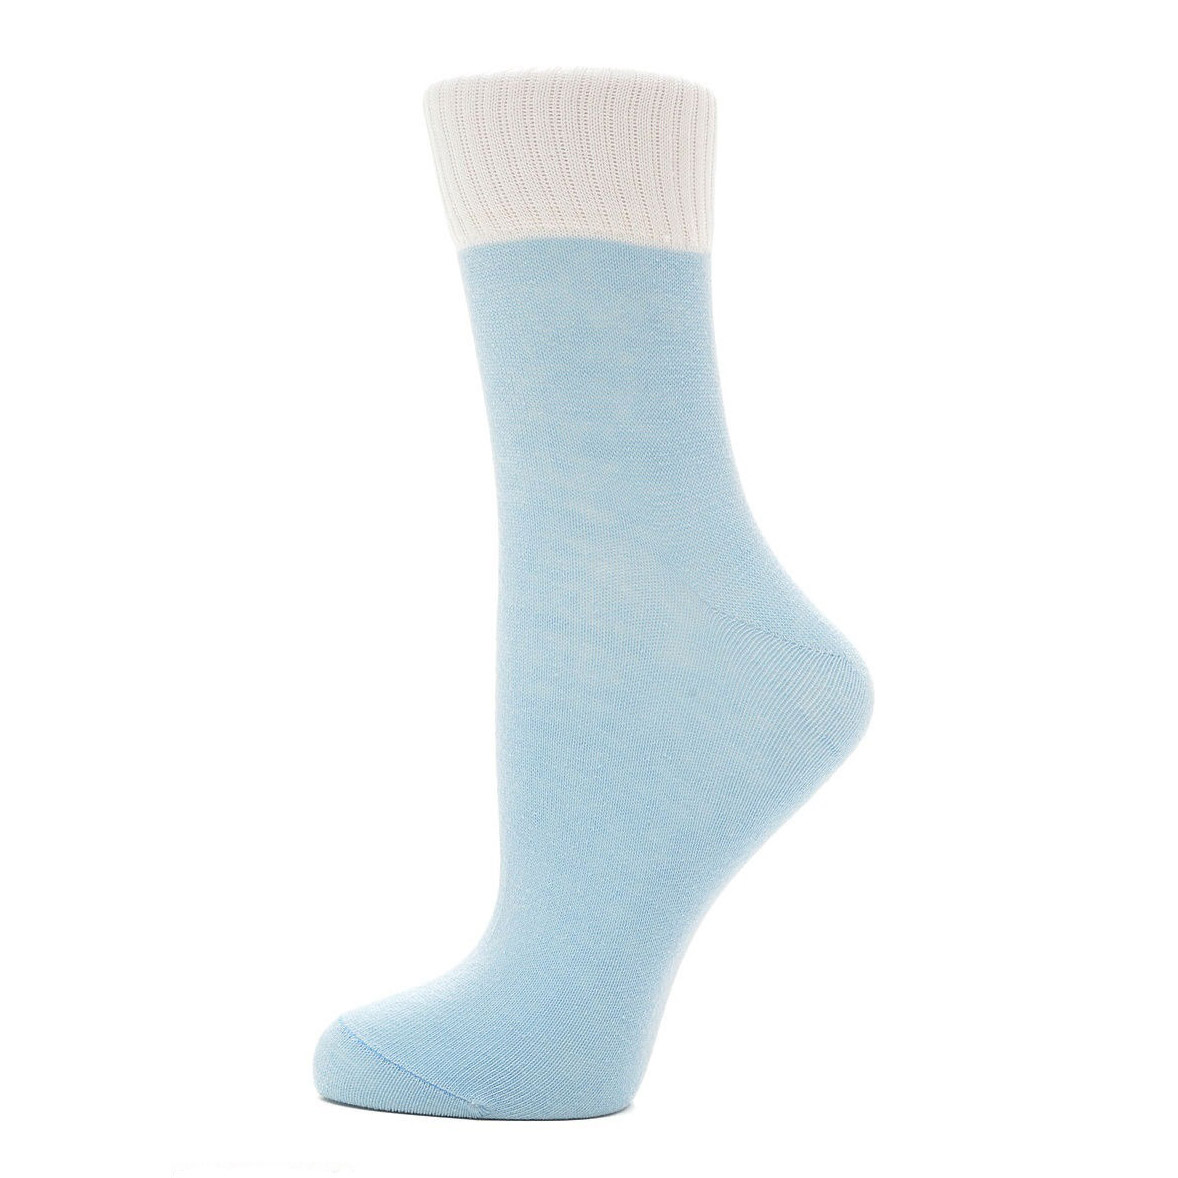 Носки Karmen Calza Look sky blu S 35-37, цвет голубой, размер 35-37 - фото 1